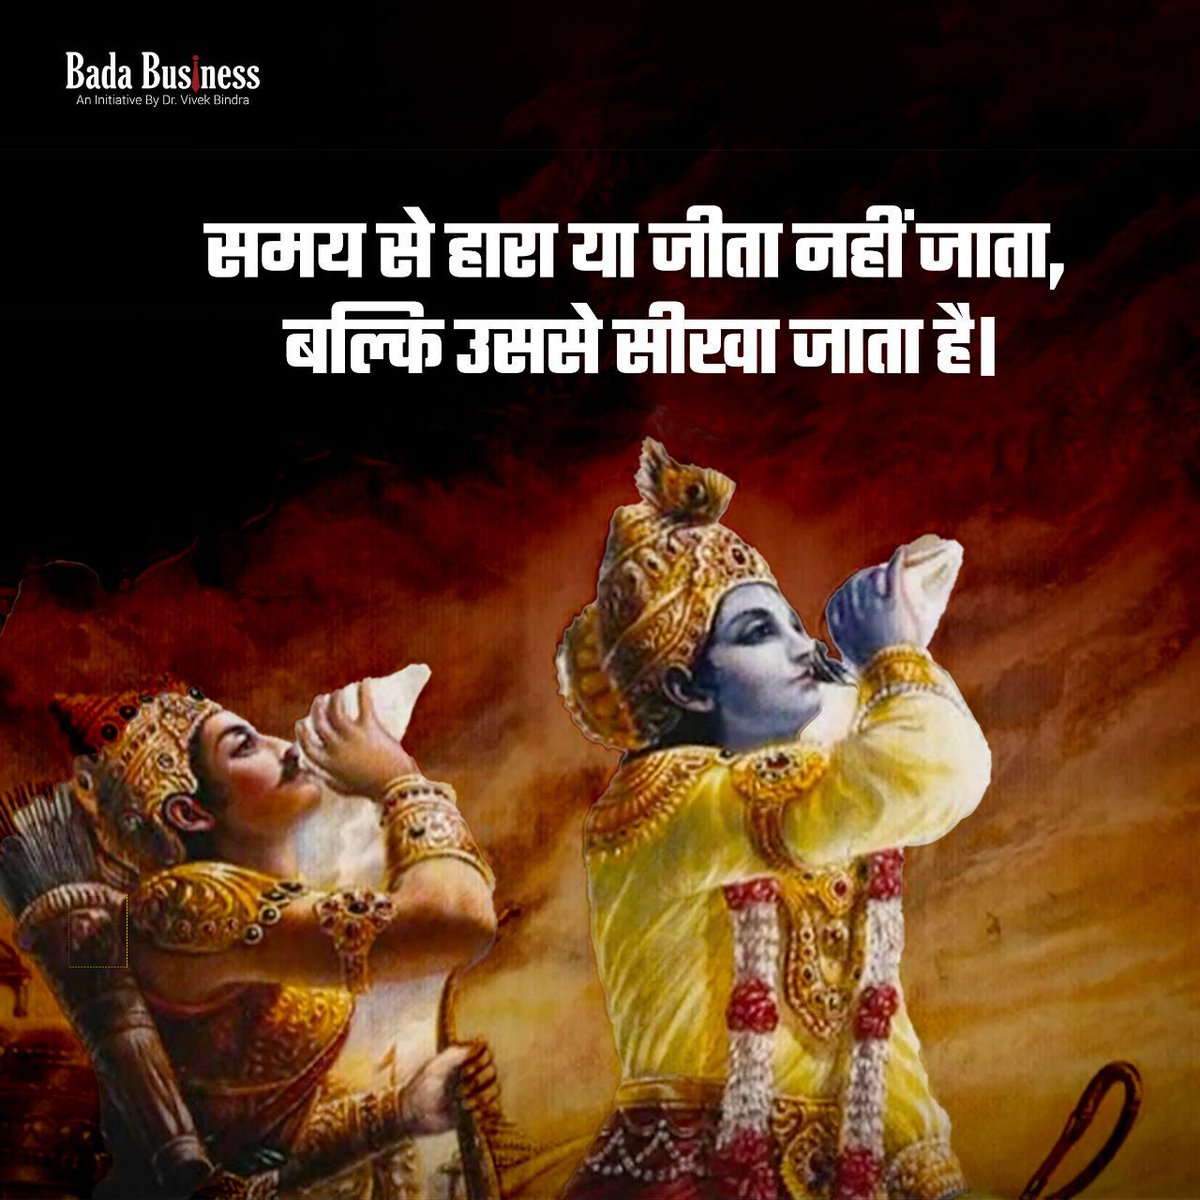 आपका दिन शुभ हो 🙏 

#DrVivekBindra #BadaBusiness #BhagavadGita